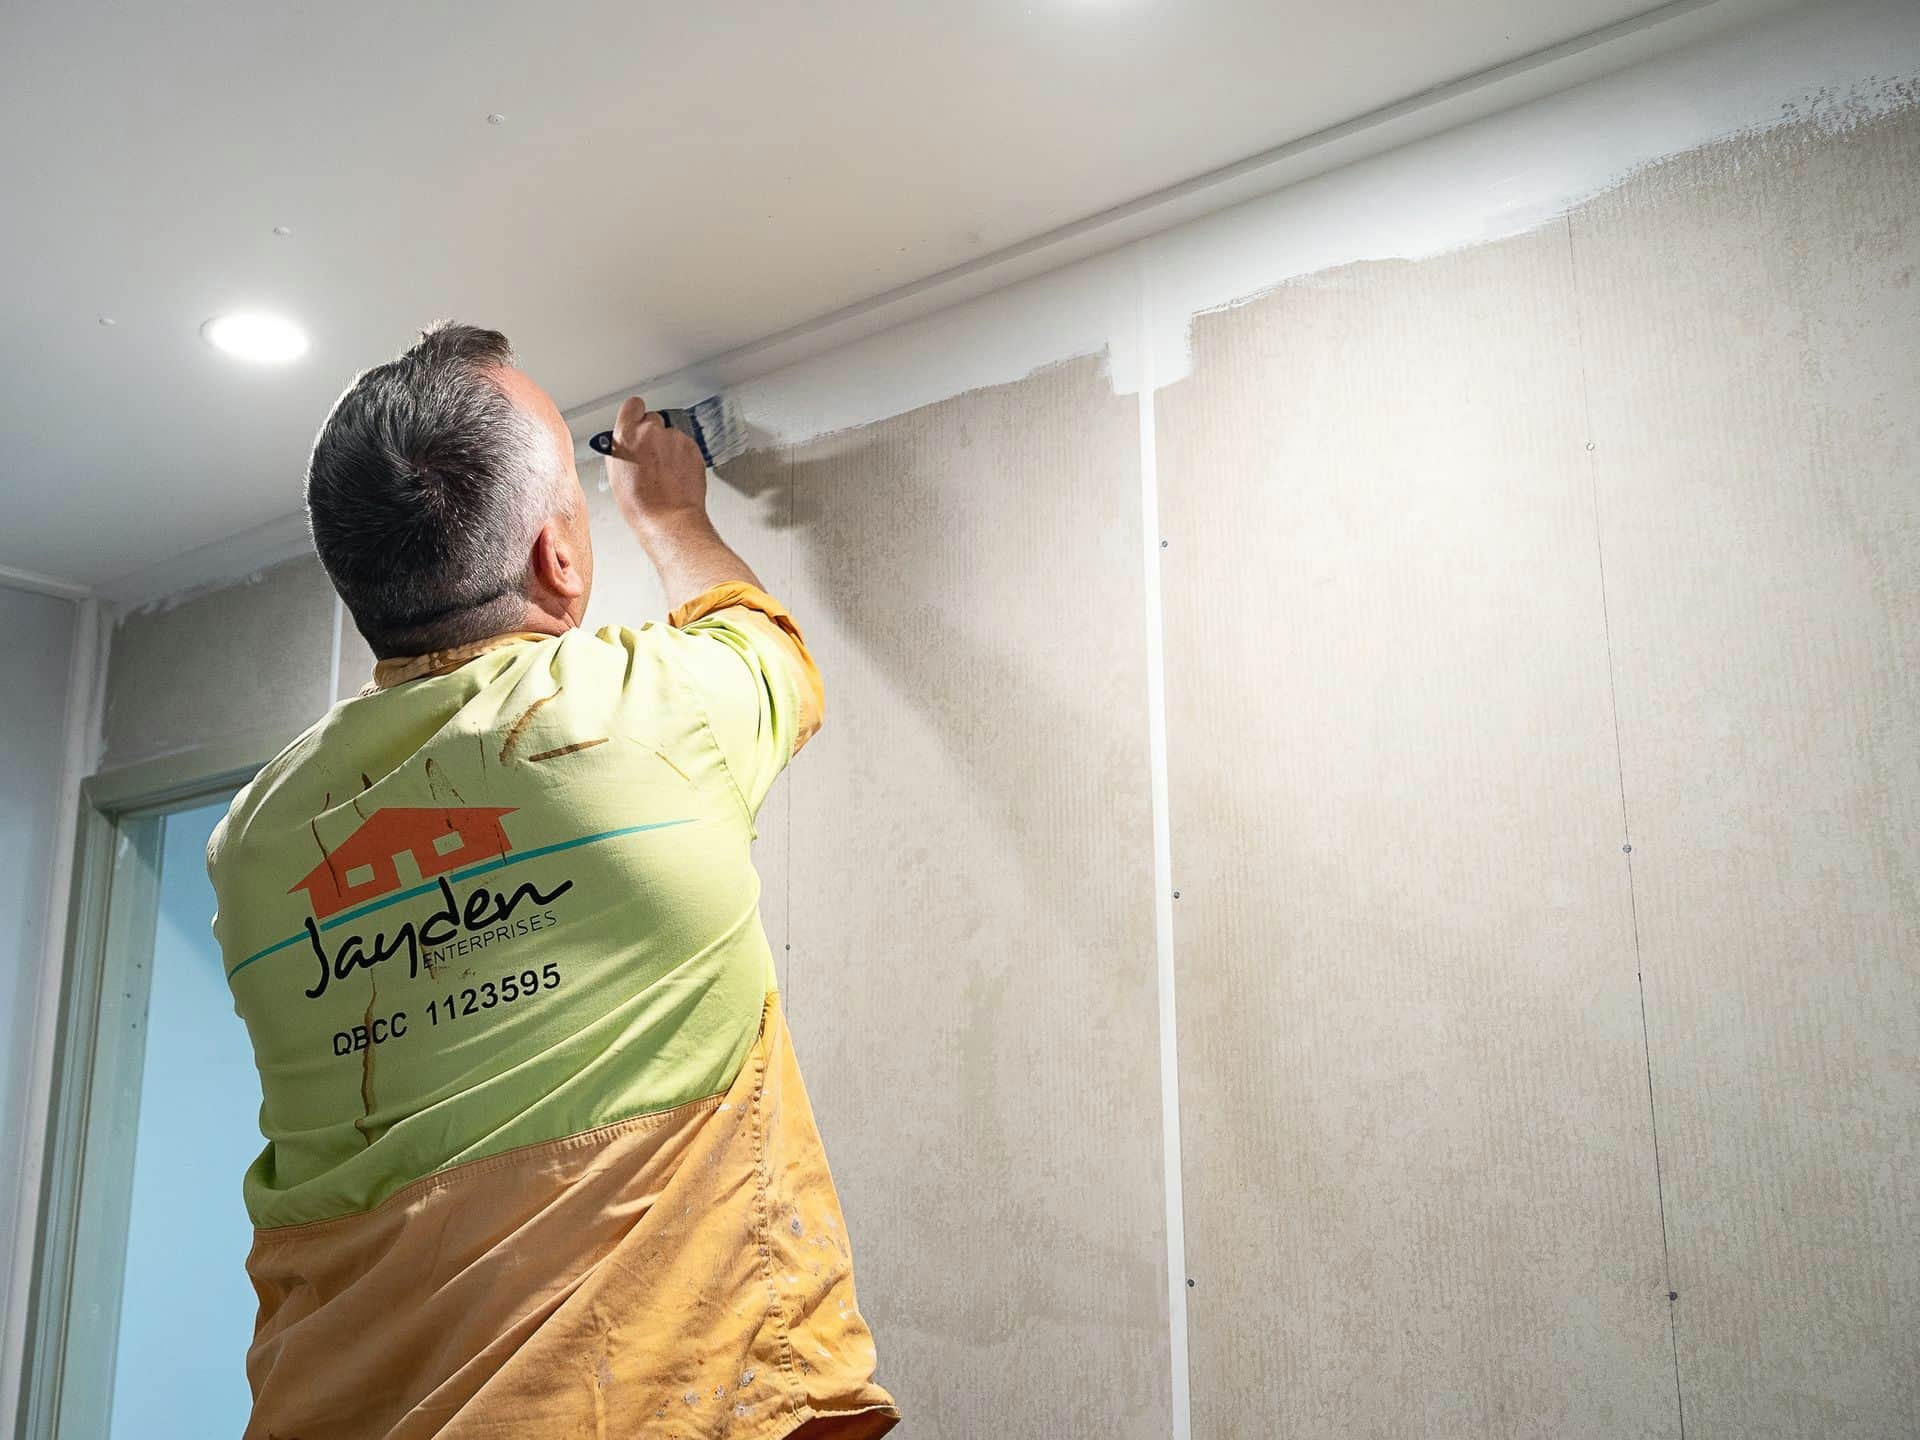 Tradesman Painting a Wall — Jayden Enterprises in Mackay, QLD